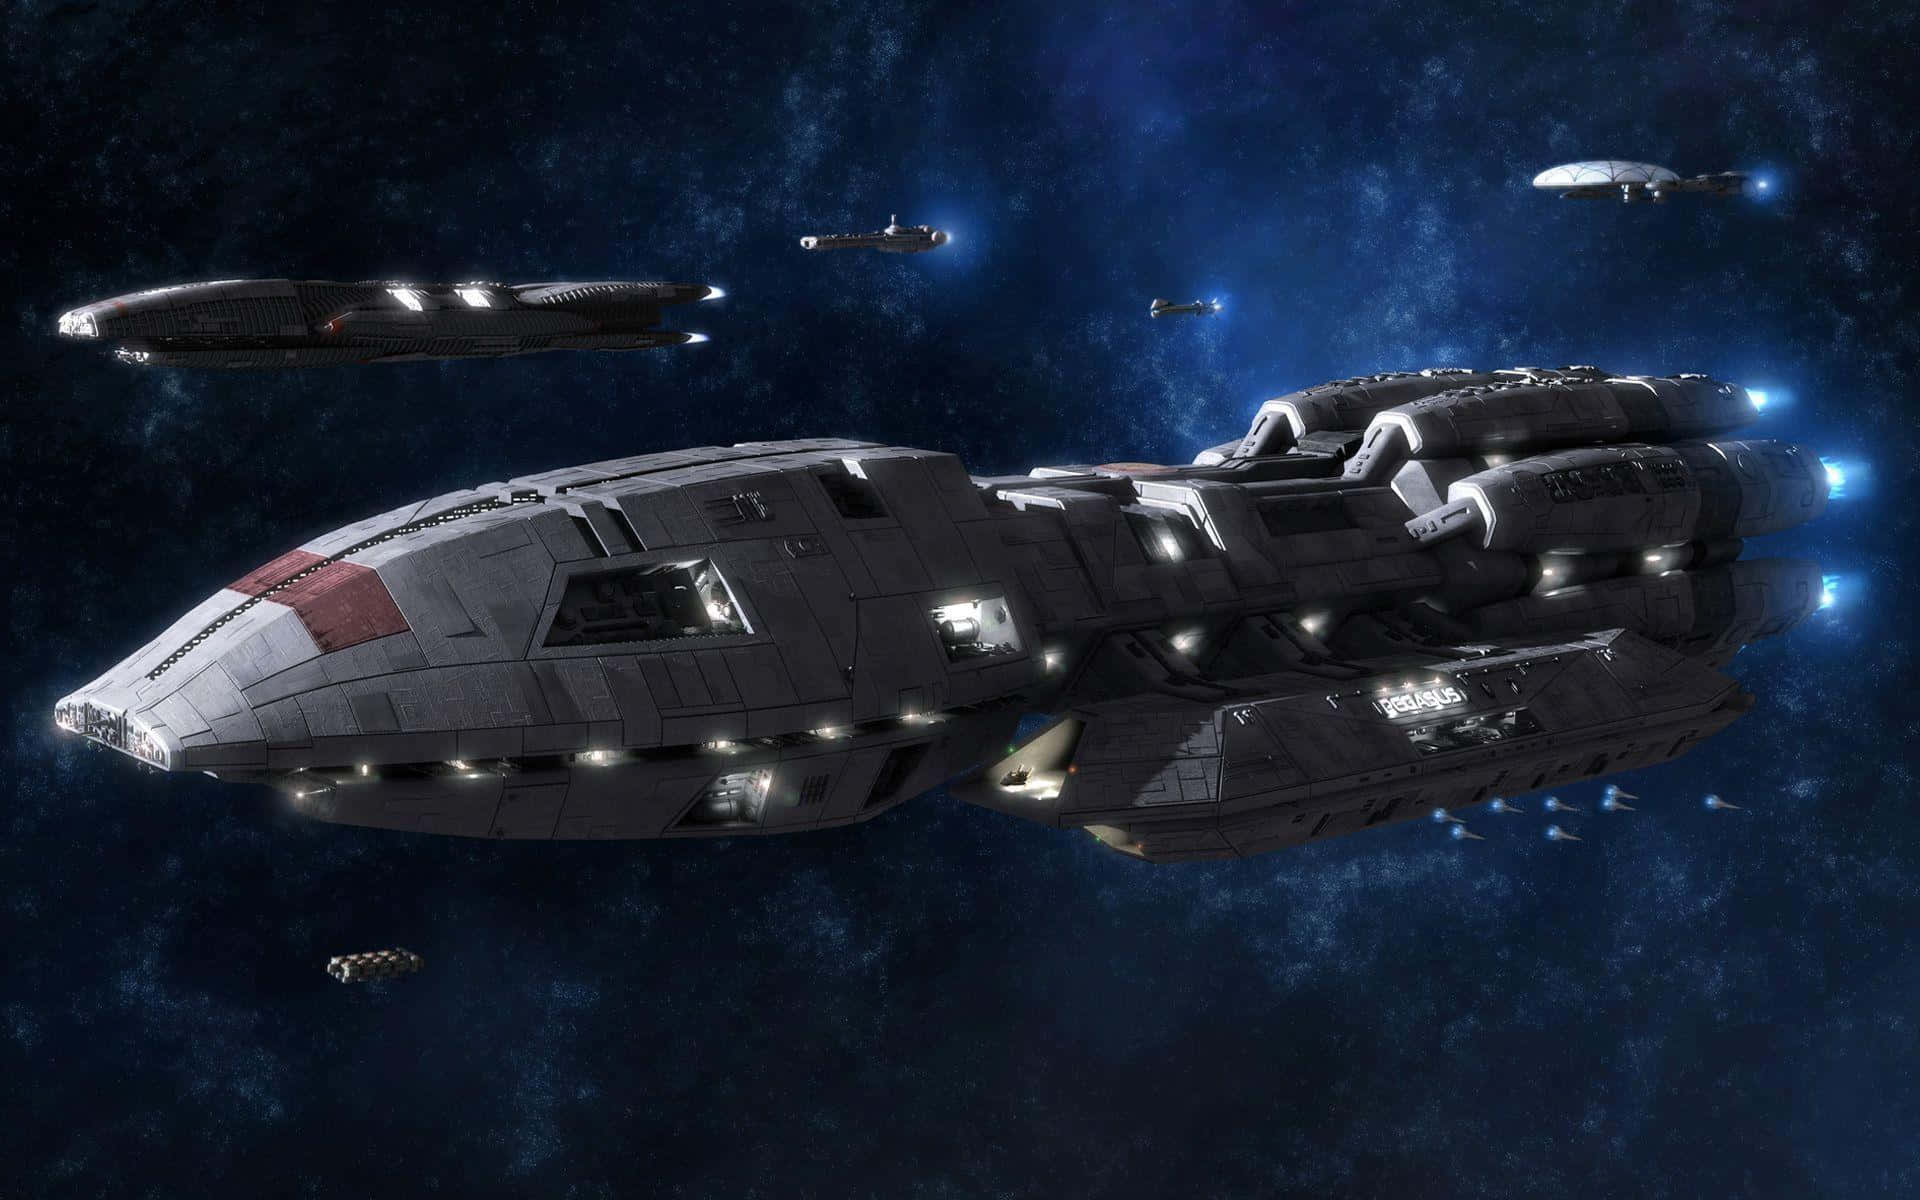 Battlestar Galactica Casts A Bold Silhouette In The Final Frontier Wallpaper